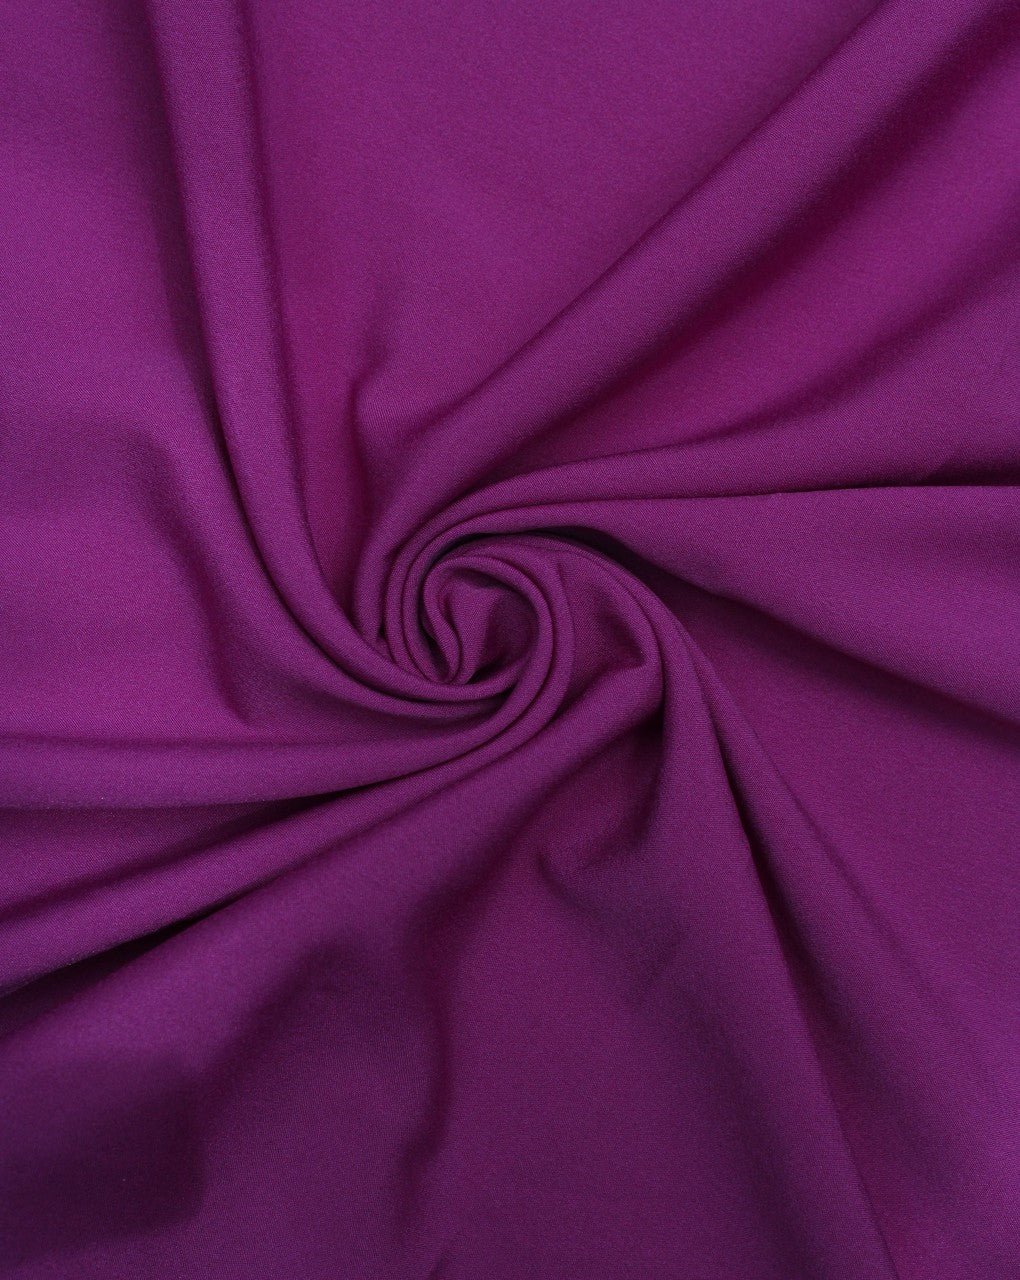 Plain Purple Polyester Crepe Fabric